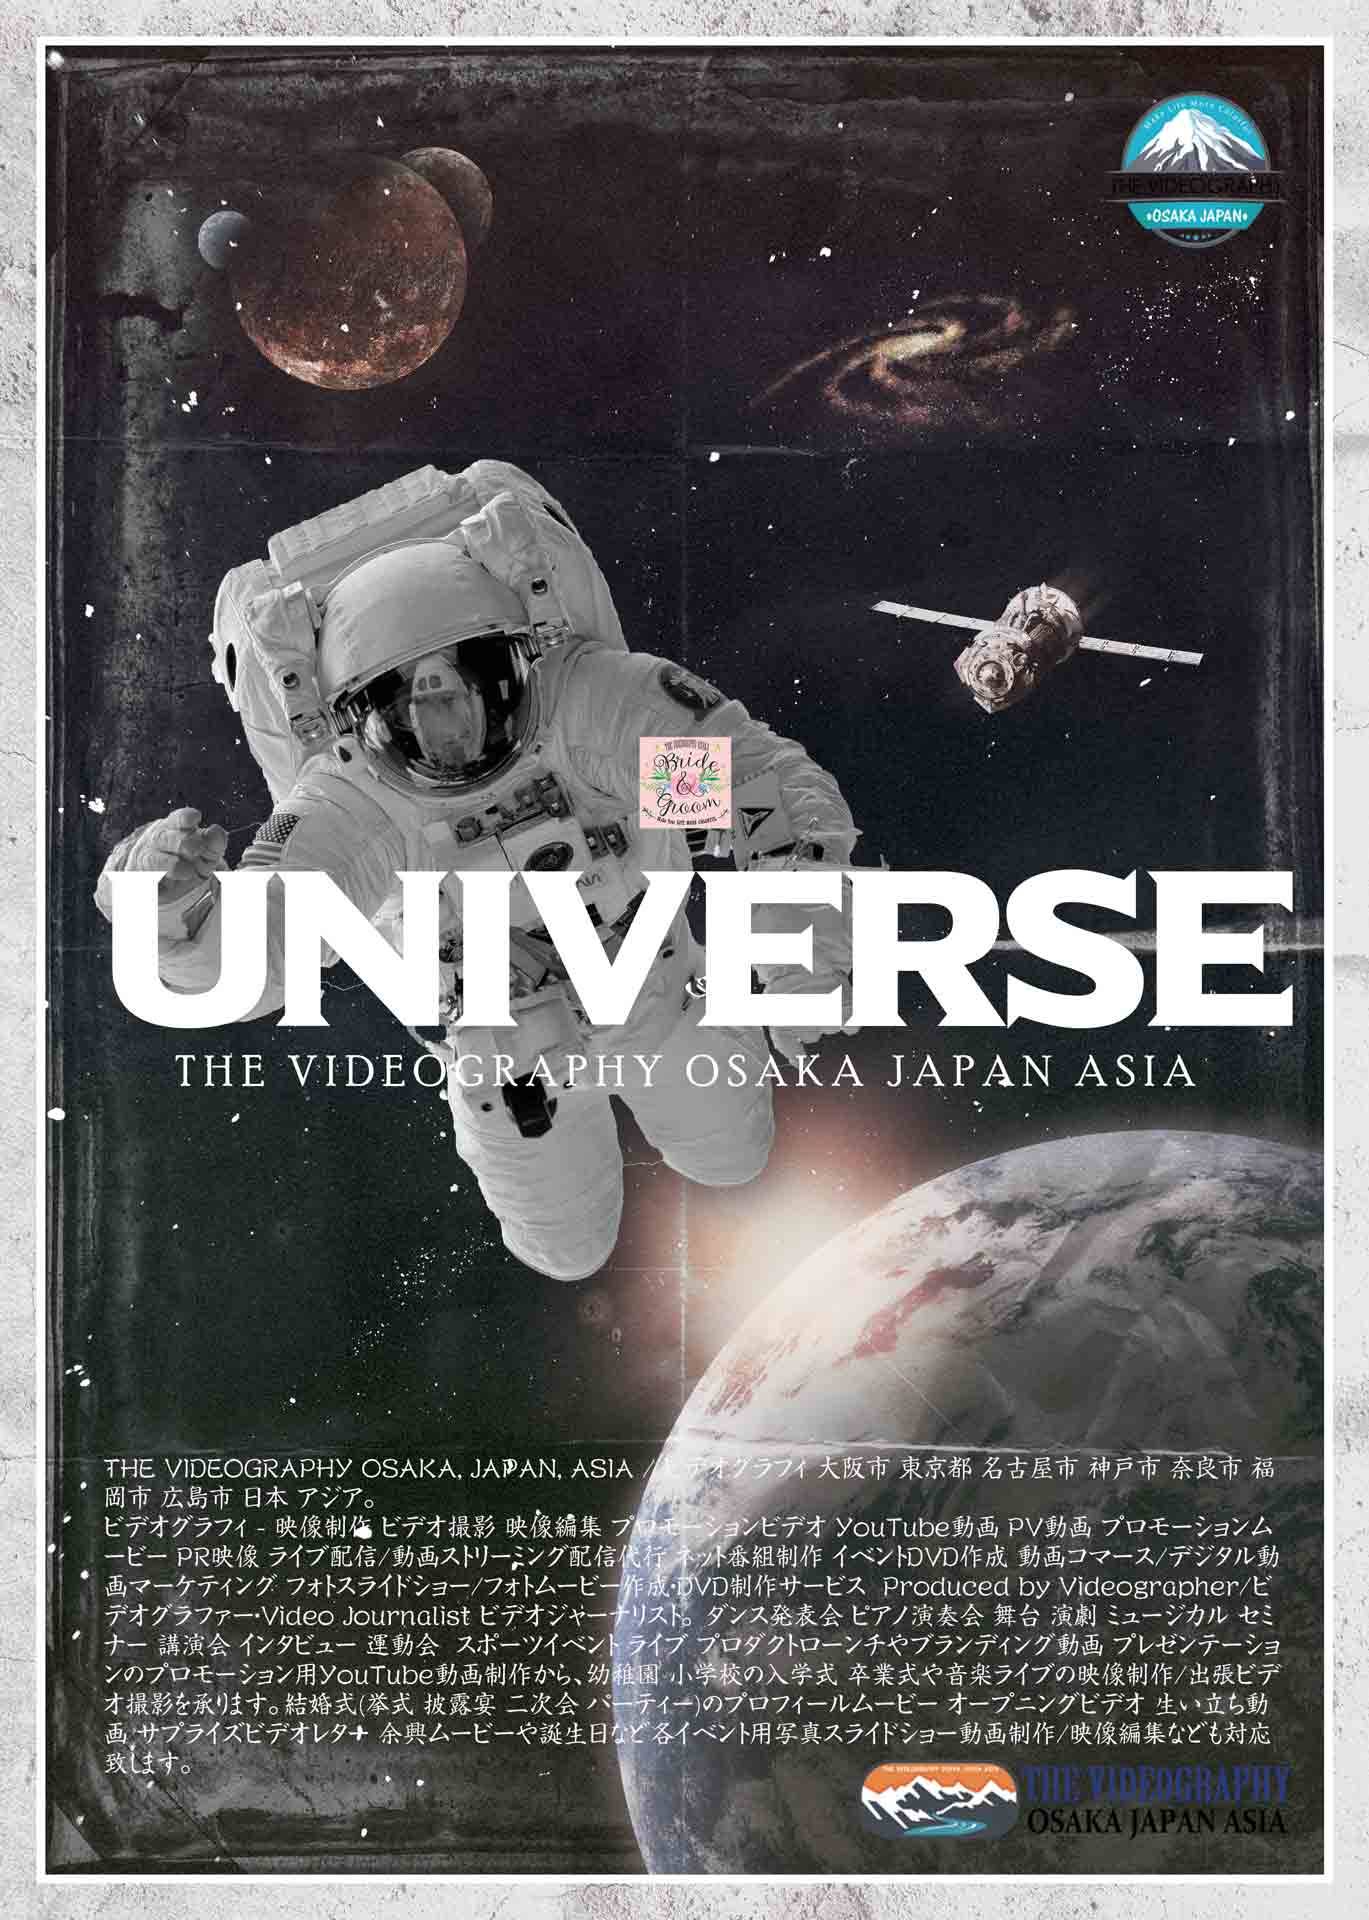 Space Travel スペーストラベル・宇宙旅行。Who win the first prize? Who wanna be the first private astronaut? Meet Universe Movie Project. あなたの夢を叶えます。PVとして動画上で、夢の月面旅行 宇宙遊泳や銀河系の探索が可能です。 THE VIDEOGRAPHY OSAKA, JAPAN, ASIA / ビデオグラフィ 大阪市 東京都 名古屋市 神戸市 奈良市 福岡市 広島市 日本 アジア。 ビデオグラフィ - 映像制作 ビデオ撮影 映像編集 プロモーションビデオ YouTube動画 PV動画 プロモーションムービー PR映像 ライブ配信/動画ストリーミング配信代行 ネット番組制作 イベントDVD作成 動画コマース/デジタル動画マーケティング フォトスライドショー/フォトムービー作成・DVD制作サービス Produced by Videographer/ビデオグラファー・Video Journalist ビデオジャーナリスト。 ダンス発表会 ピアノ演奏会 舞台 演劇 ミュージカル セミナー 講演会 インタビュー 運動会 スポーツイベント ライブ プロダクトローンチやブランディング動画 プレゼンテーションのプロモーション用YouTube動画制作から、幼稚園 小学校の入学式 卒業式や音楽ライブの映像制作/出張ビデオ撮影を承ります。 結婚式(挙式 披露宴 二次会 パーティー)のプロフィールムービー オープニングビデオ 生い立ち動画 サプライズビデオレター 余興ムービーや誕生日など各イベント用写真スライドショー動画制作/映像編集なども対応致します。